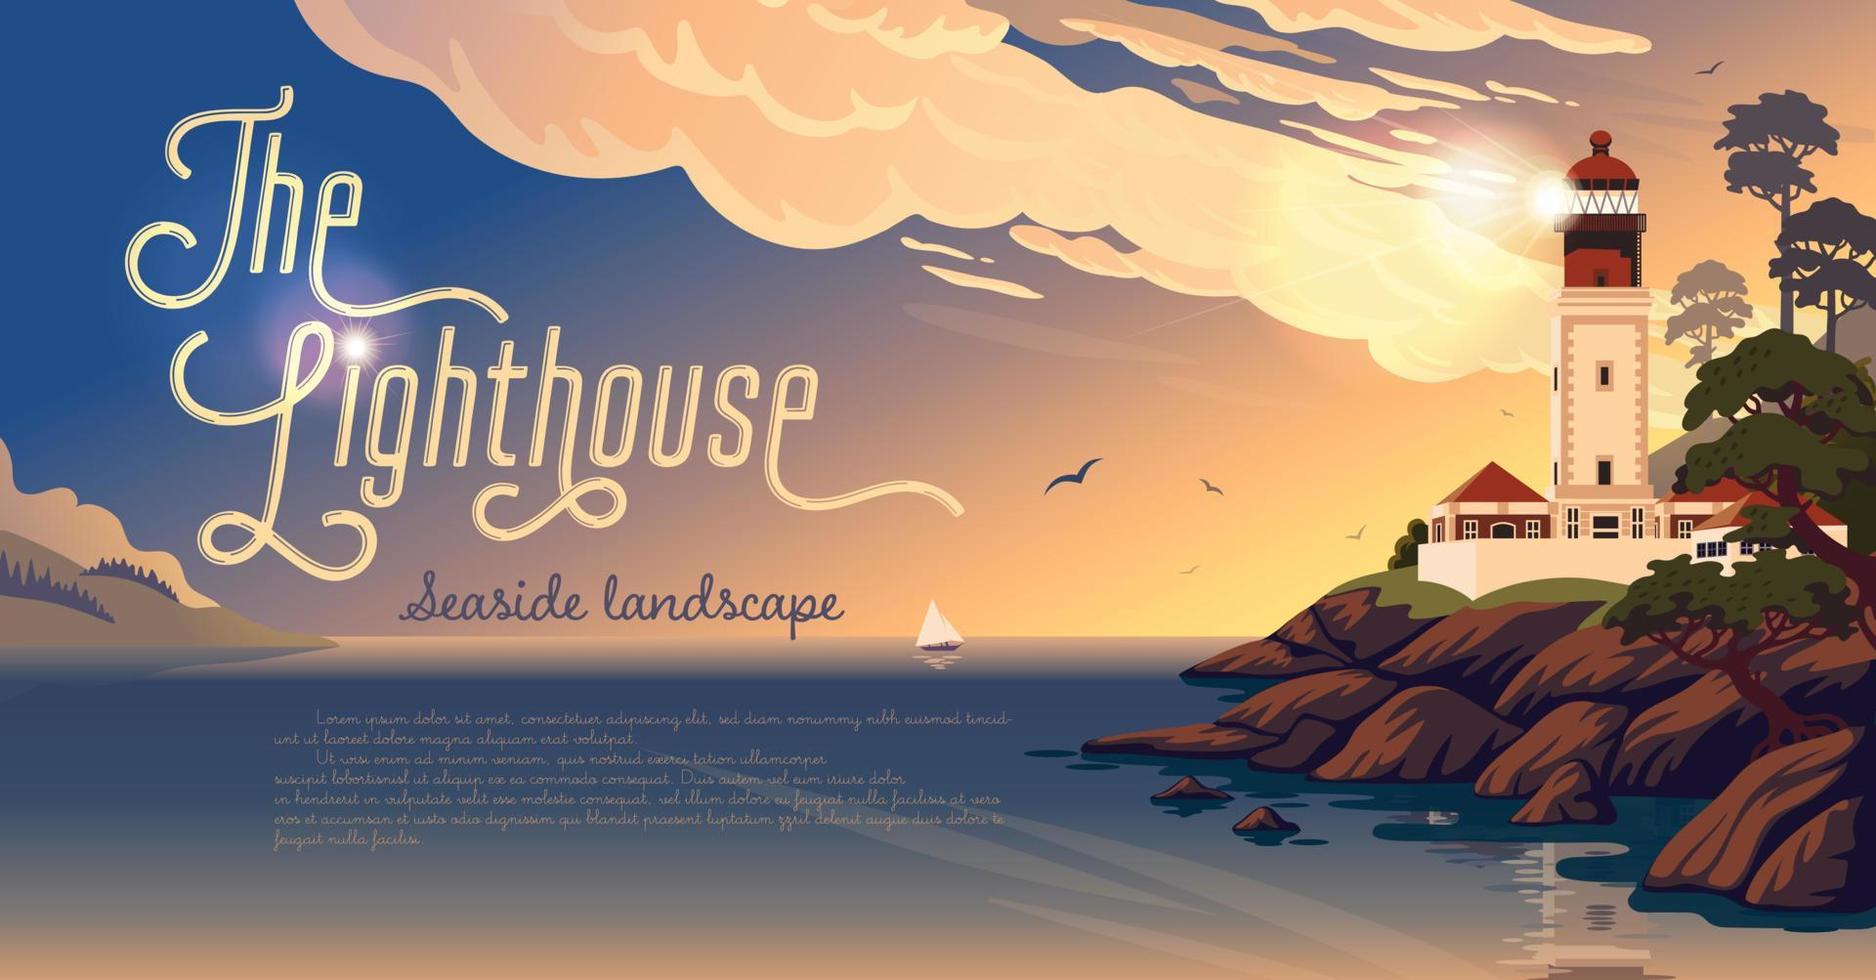 Lighthouse - vector landscape. Sea landscape with beacon on the beach on sunset. Vector horizontal illustration in flat cartoon style